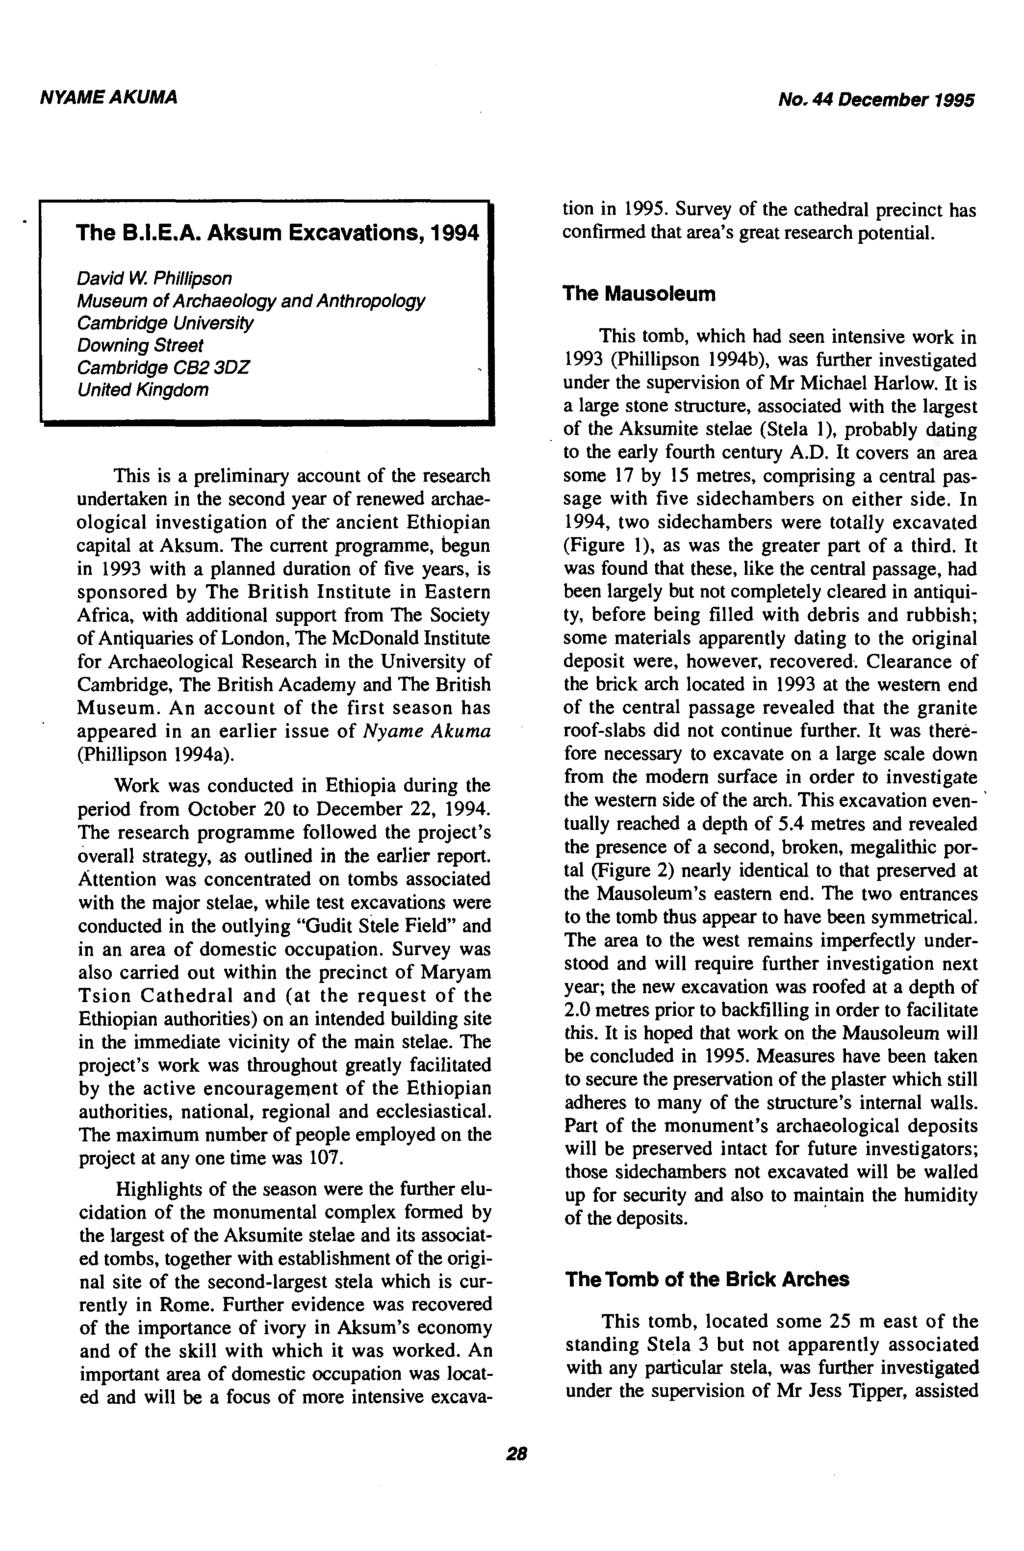 The B.I.E.A. Aksum Excavations, 1994 David W.